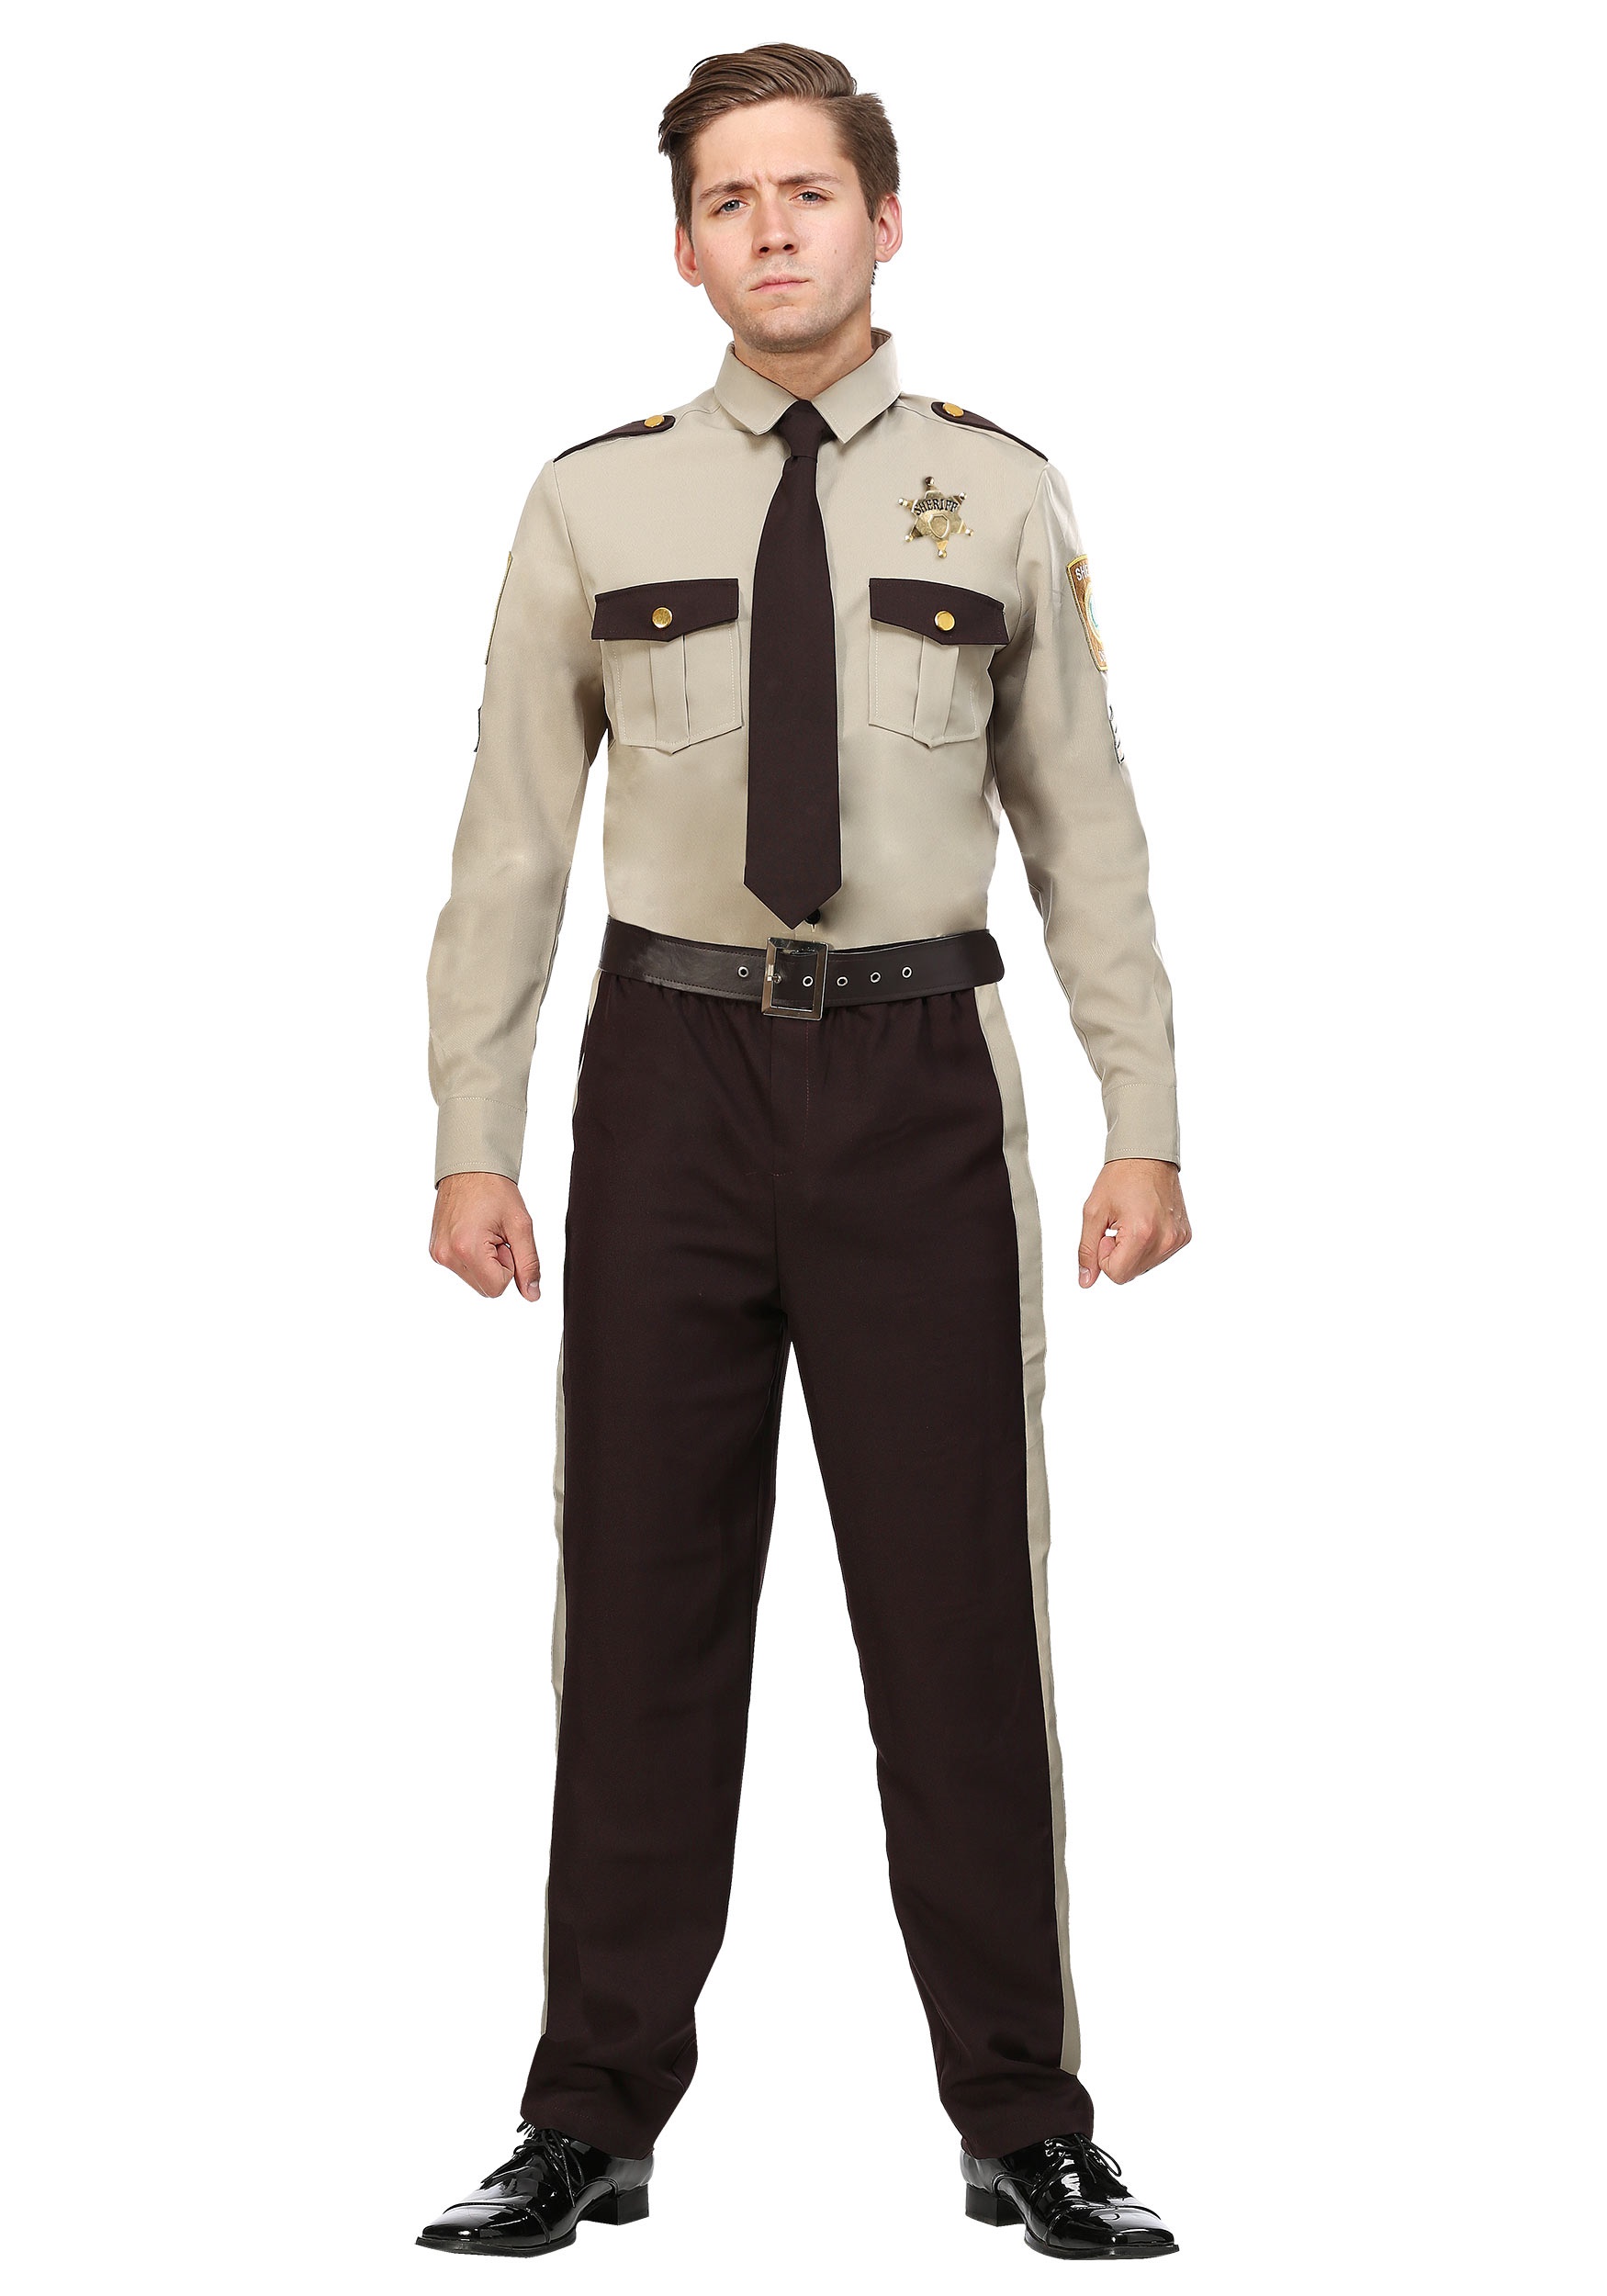 Photos - Fancy Dress Sheriff FUN Costumes  Men's Costume Brown FUN0285AD 